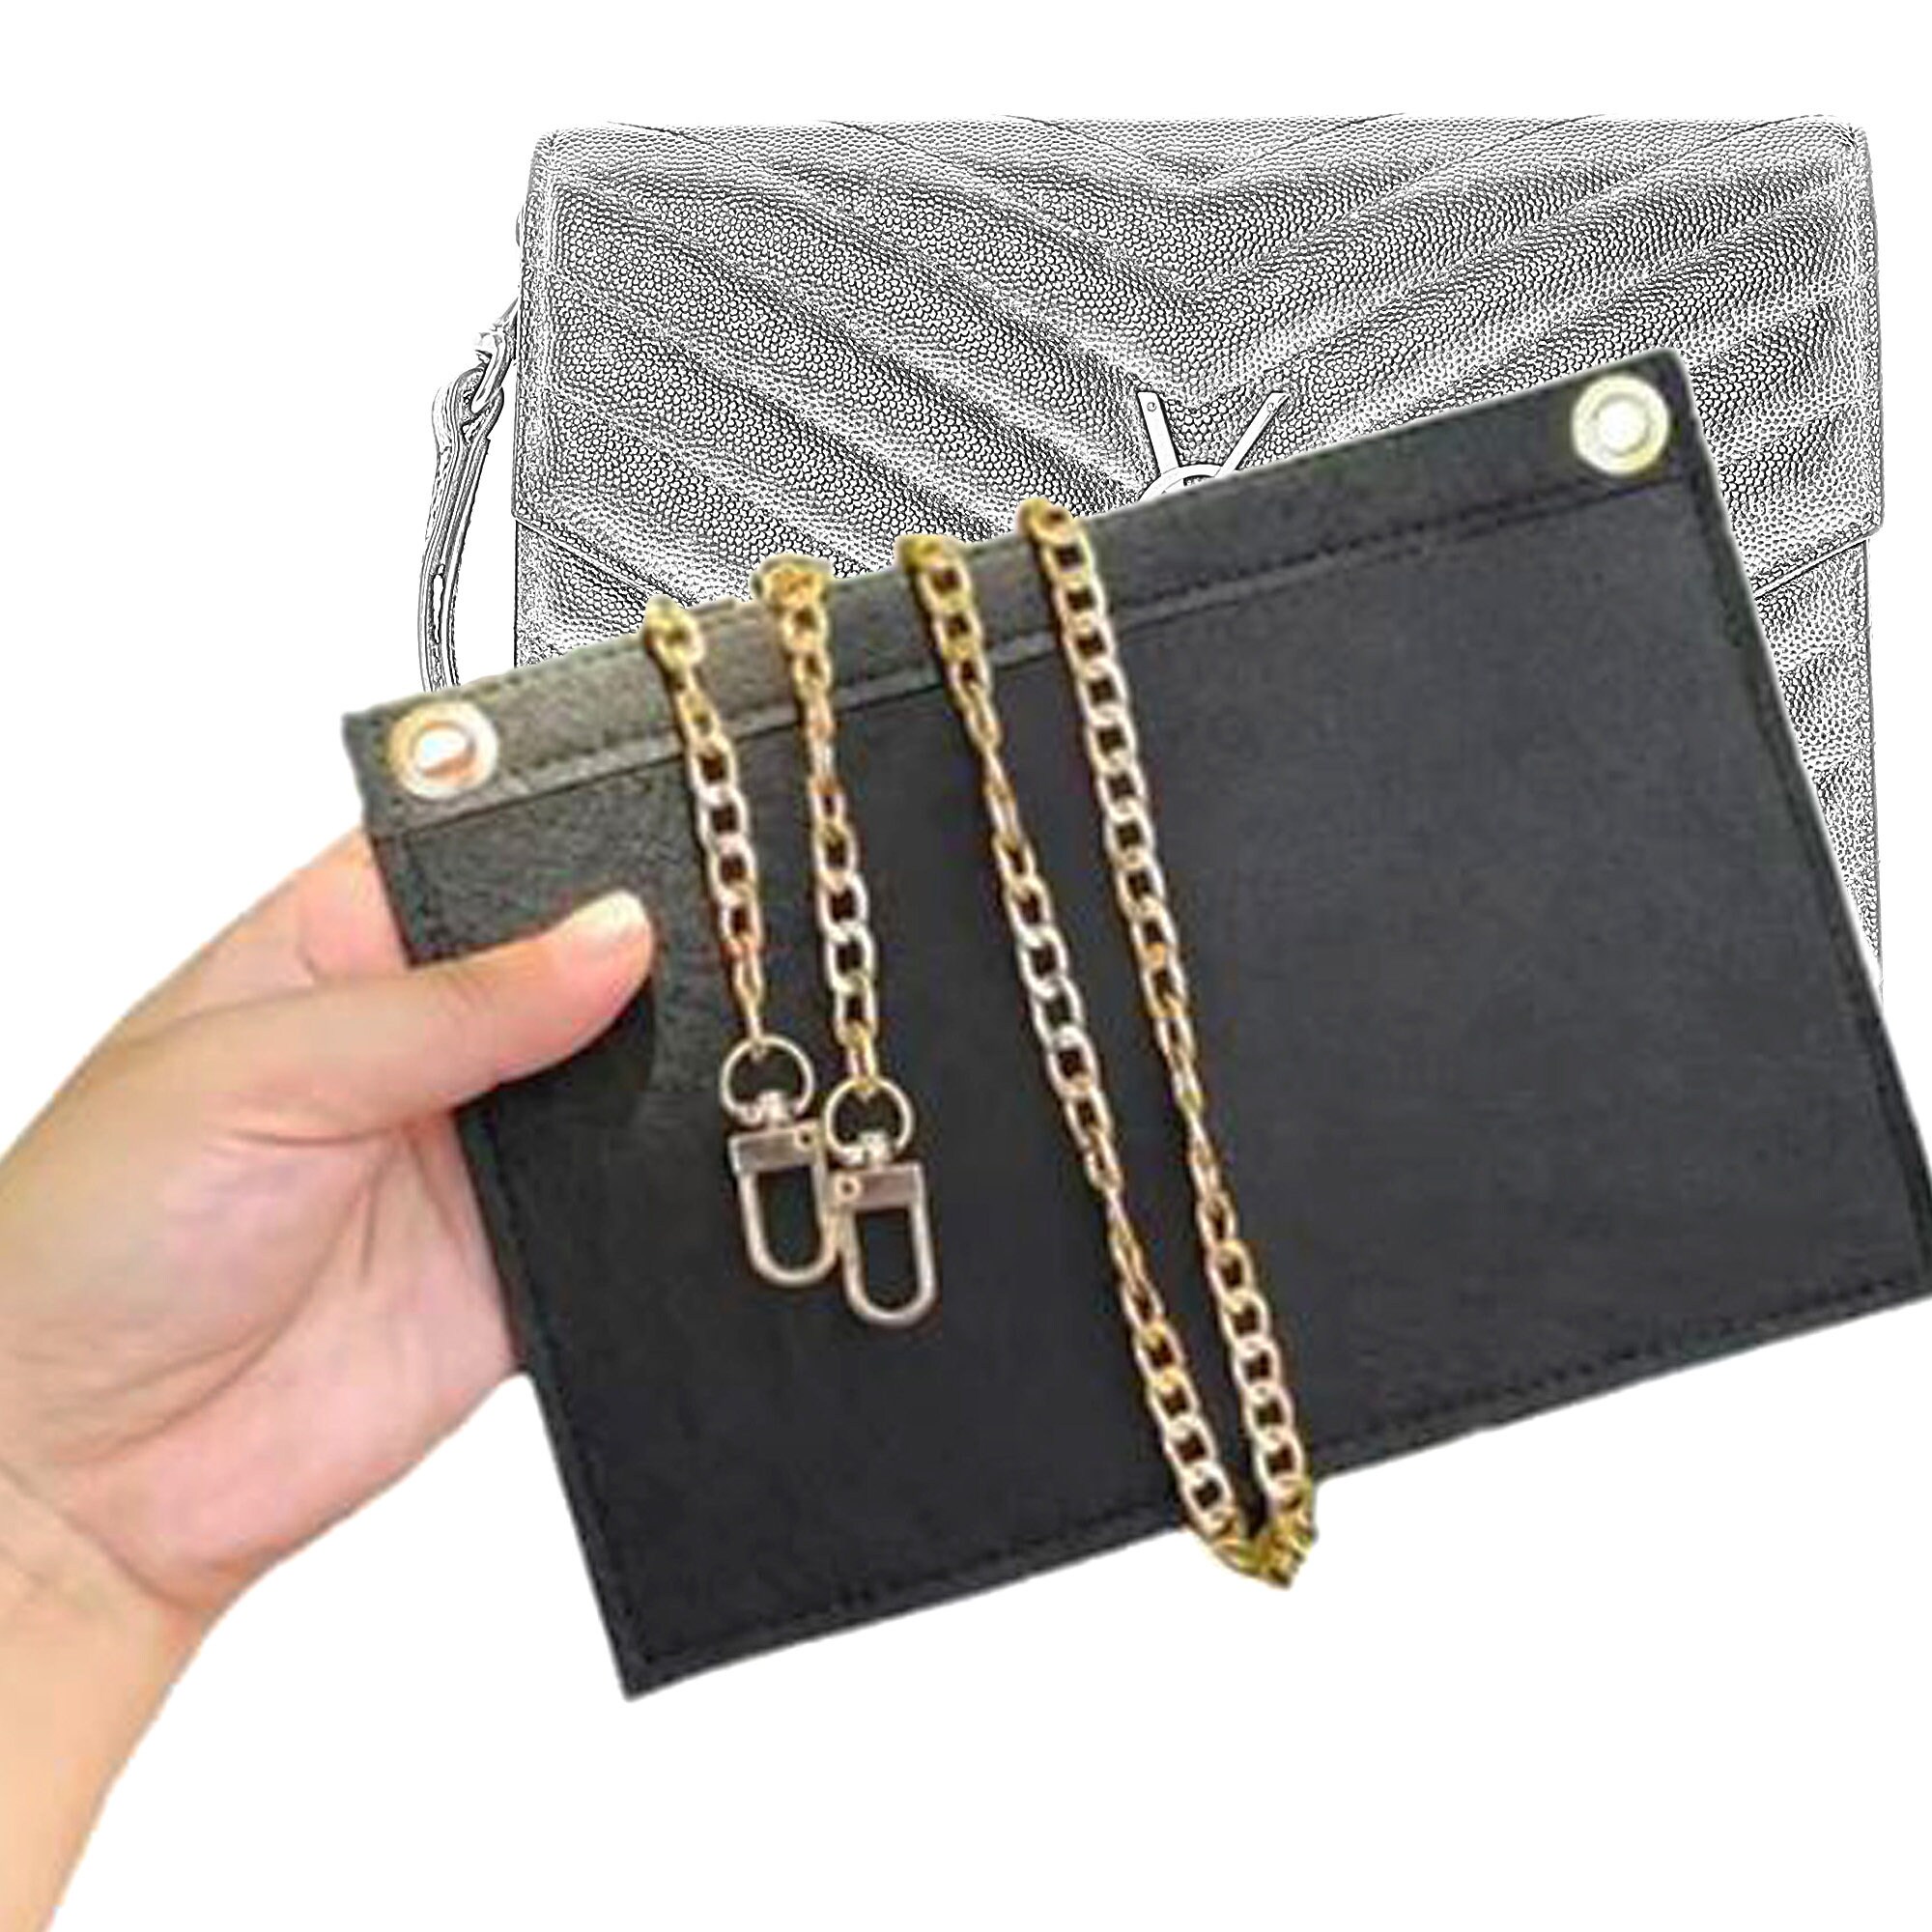 Buy Ysl Envelope Handbag Online In India -  India